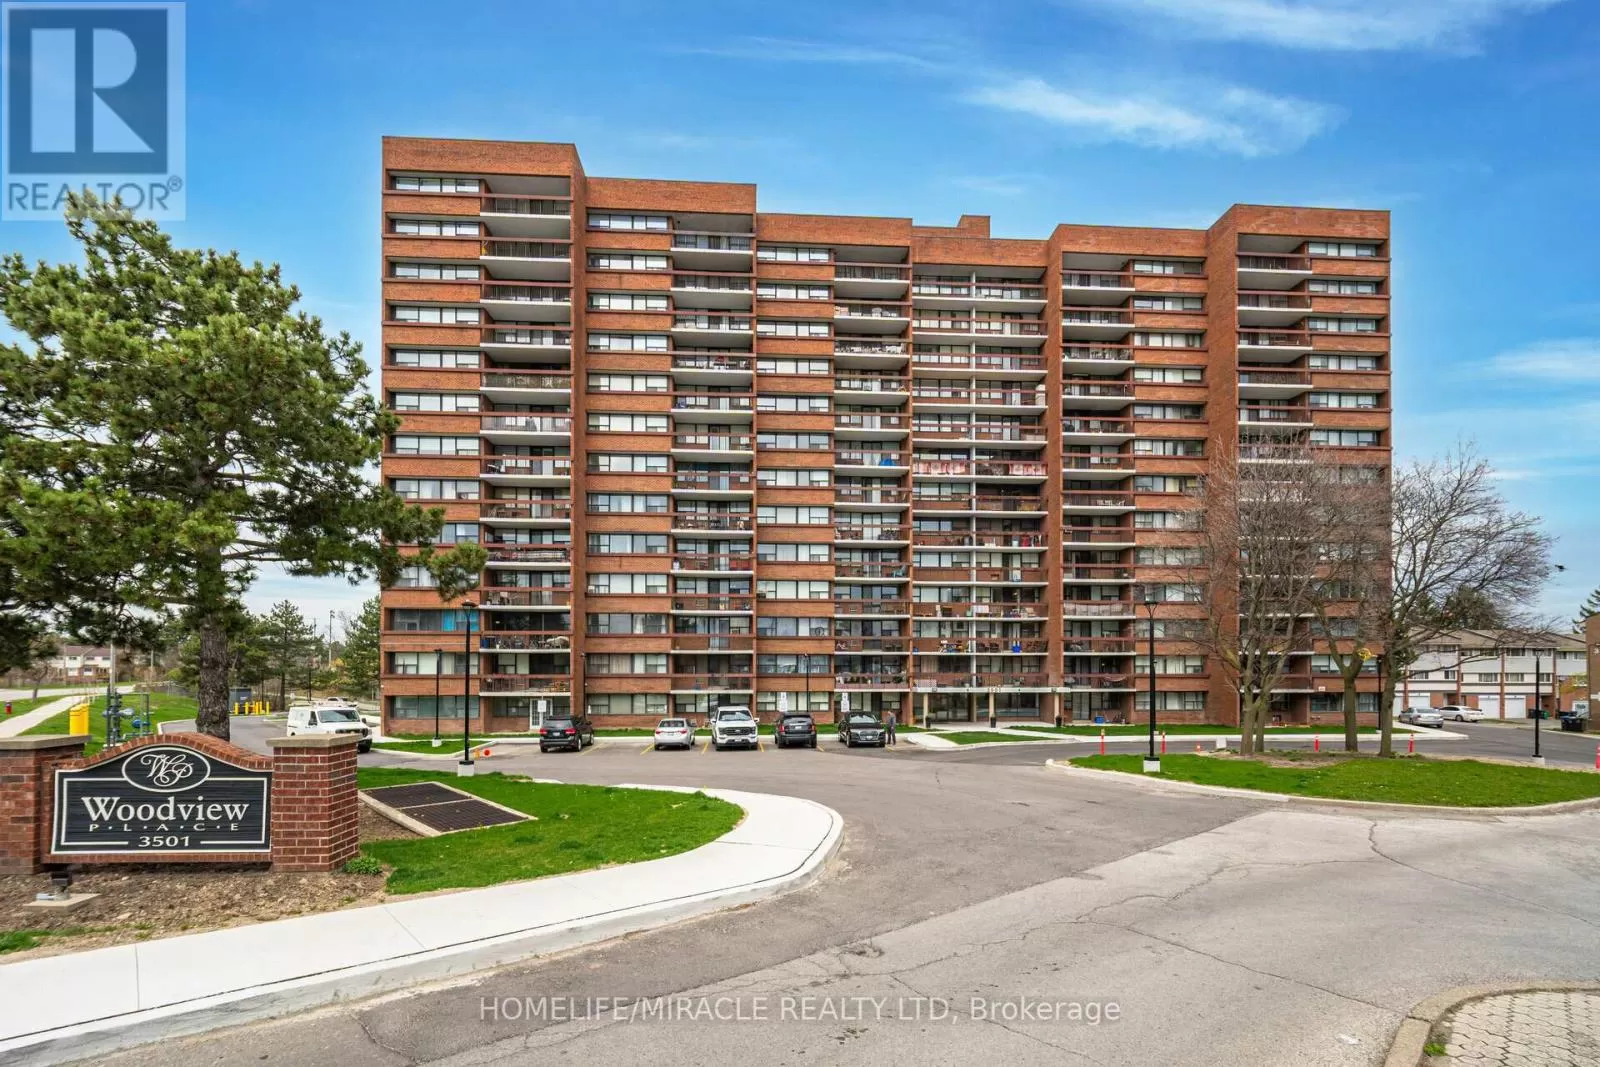 Apartment for rent: #605 -3501 Glen Erin Dr, Mississauga, Ontario L5L 2E9